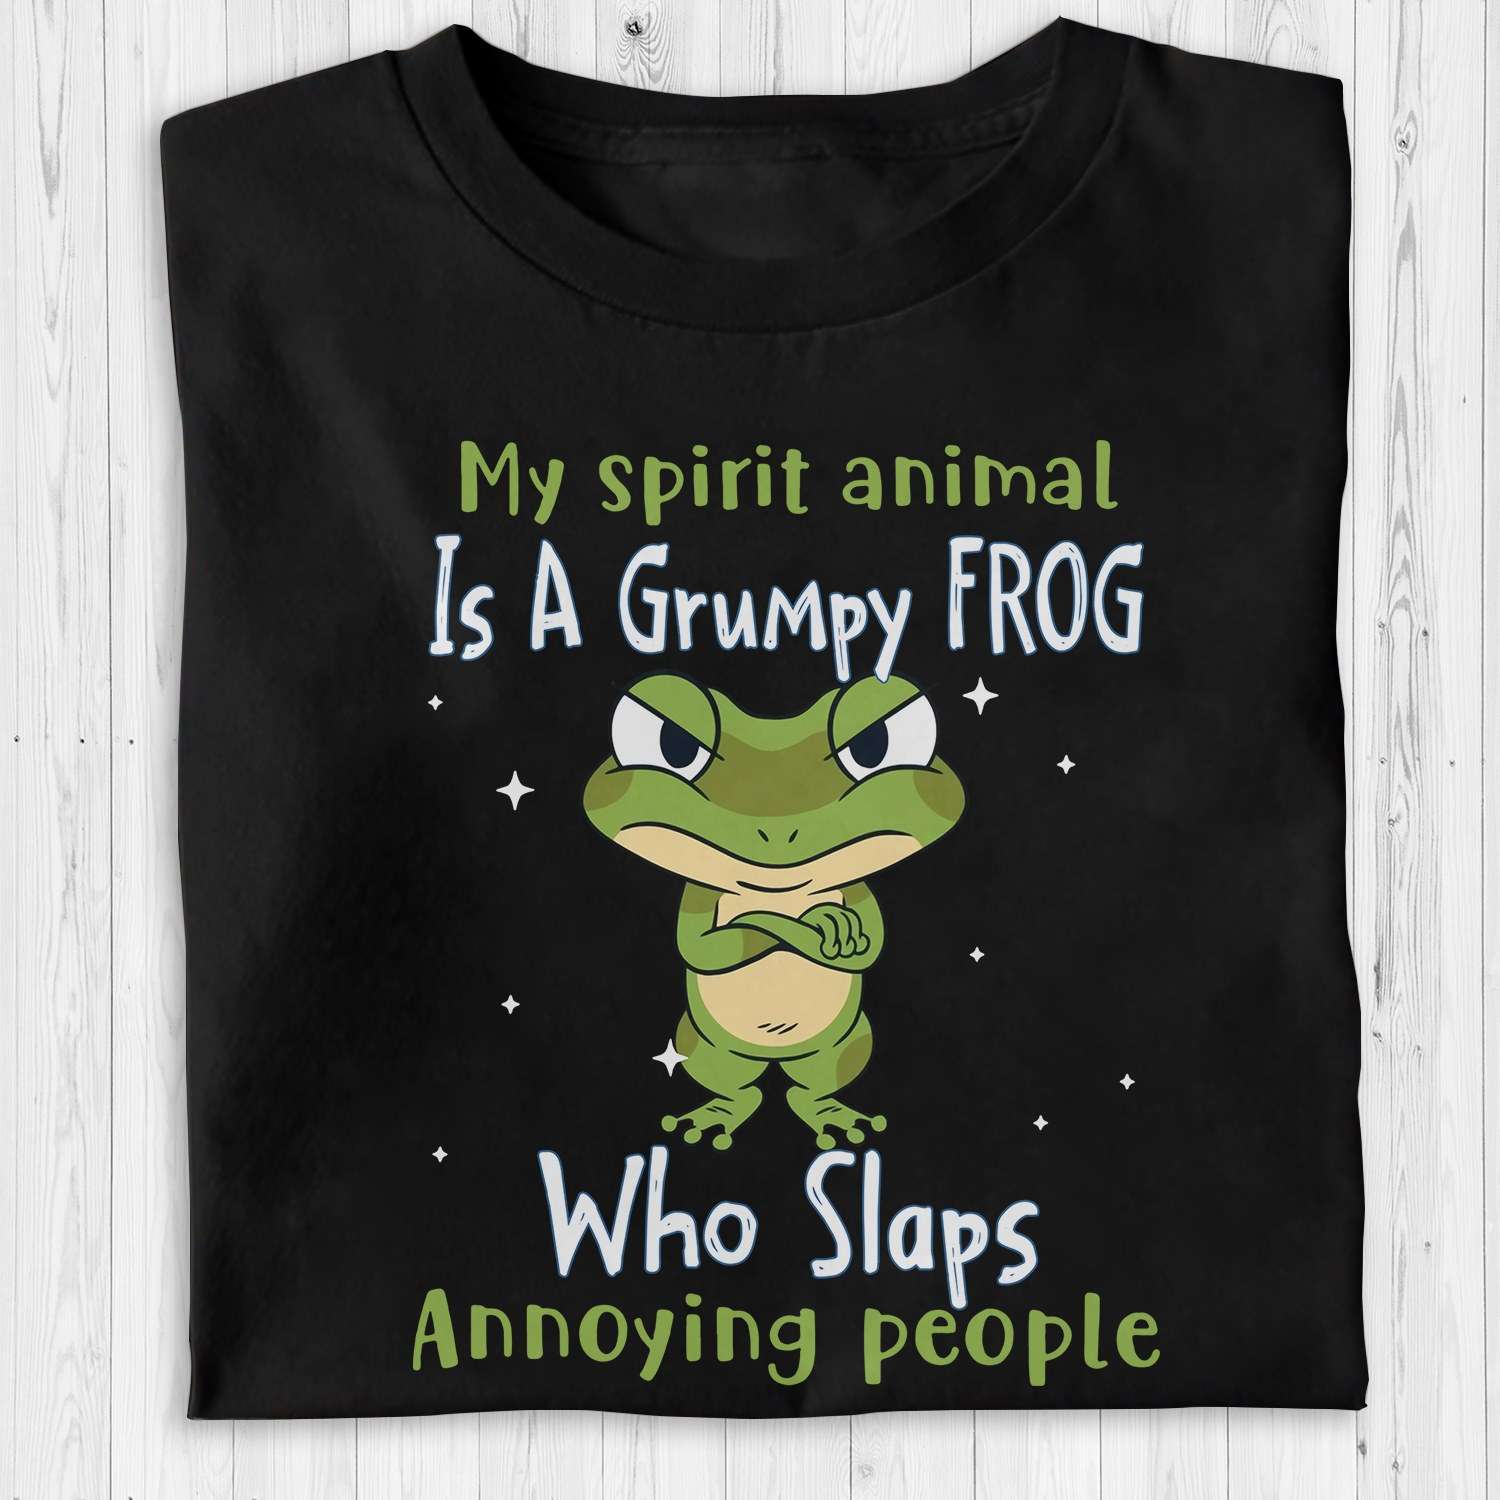 My spirit animal is a grumpy frog who slaps annoying people